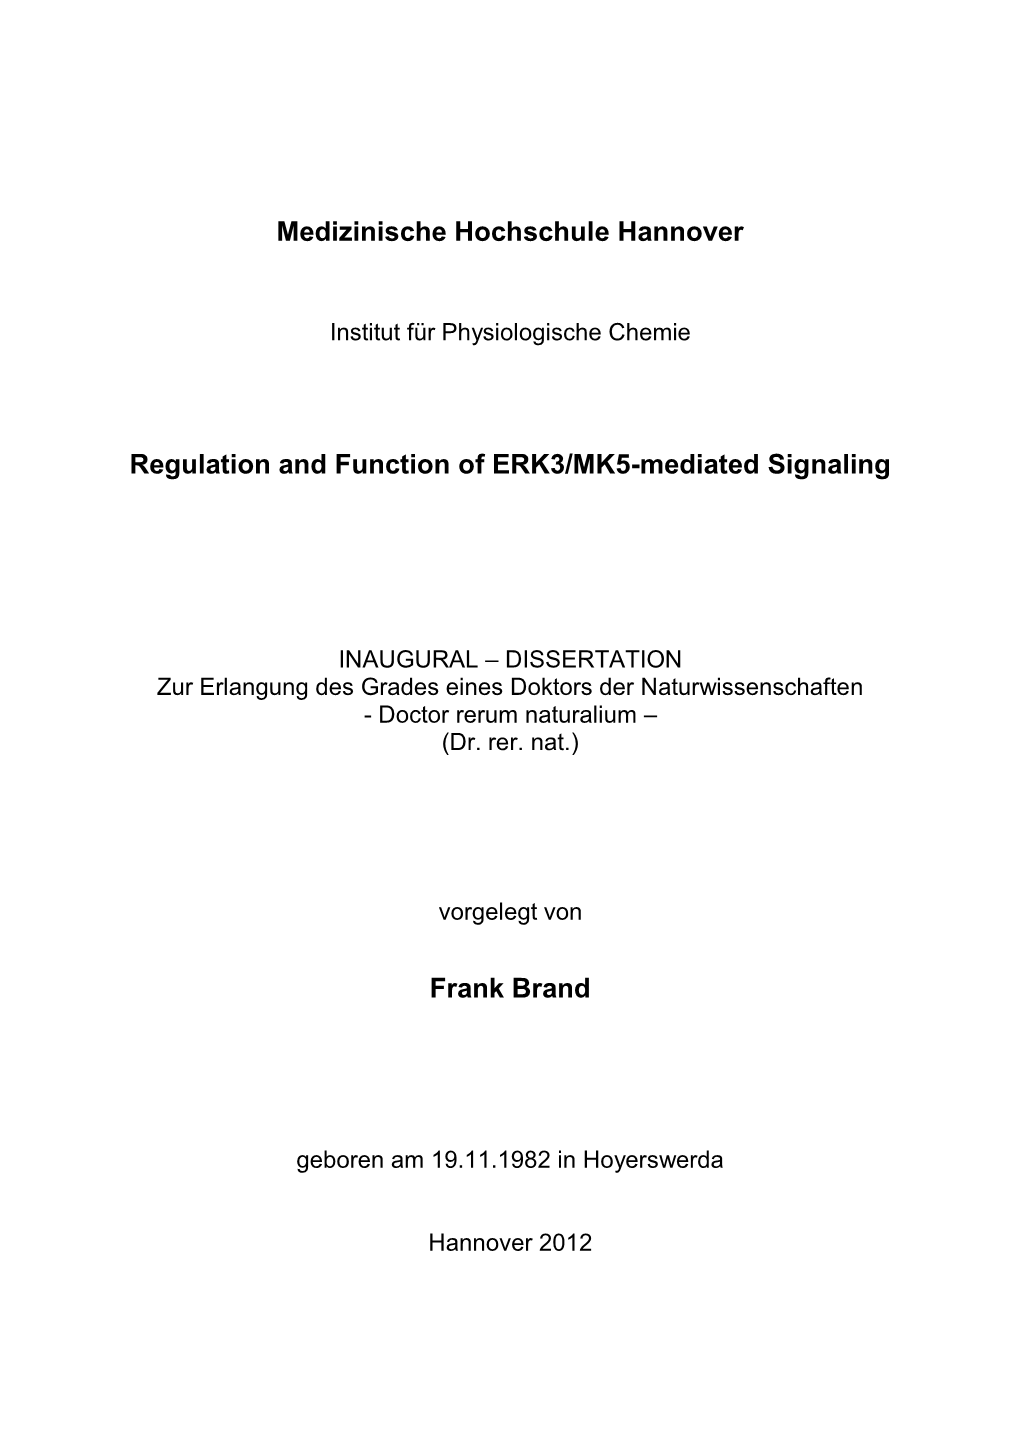 Regulation and Function of ERK3/MK5-Mediated Signaling